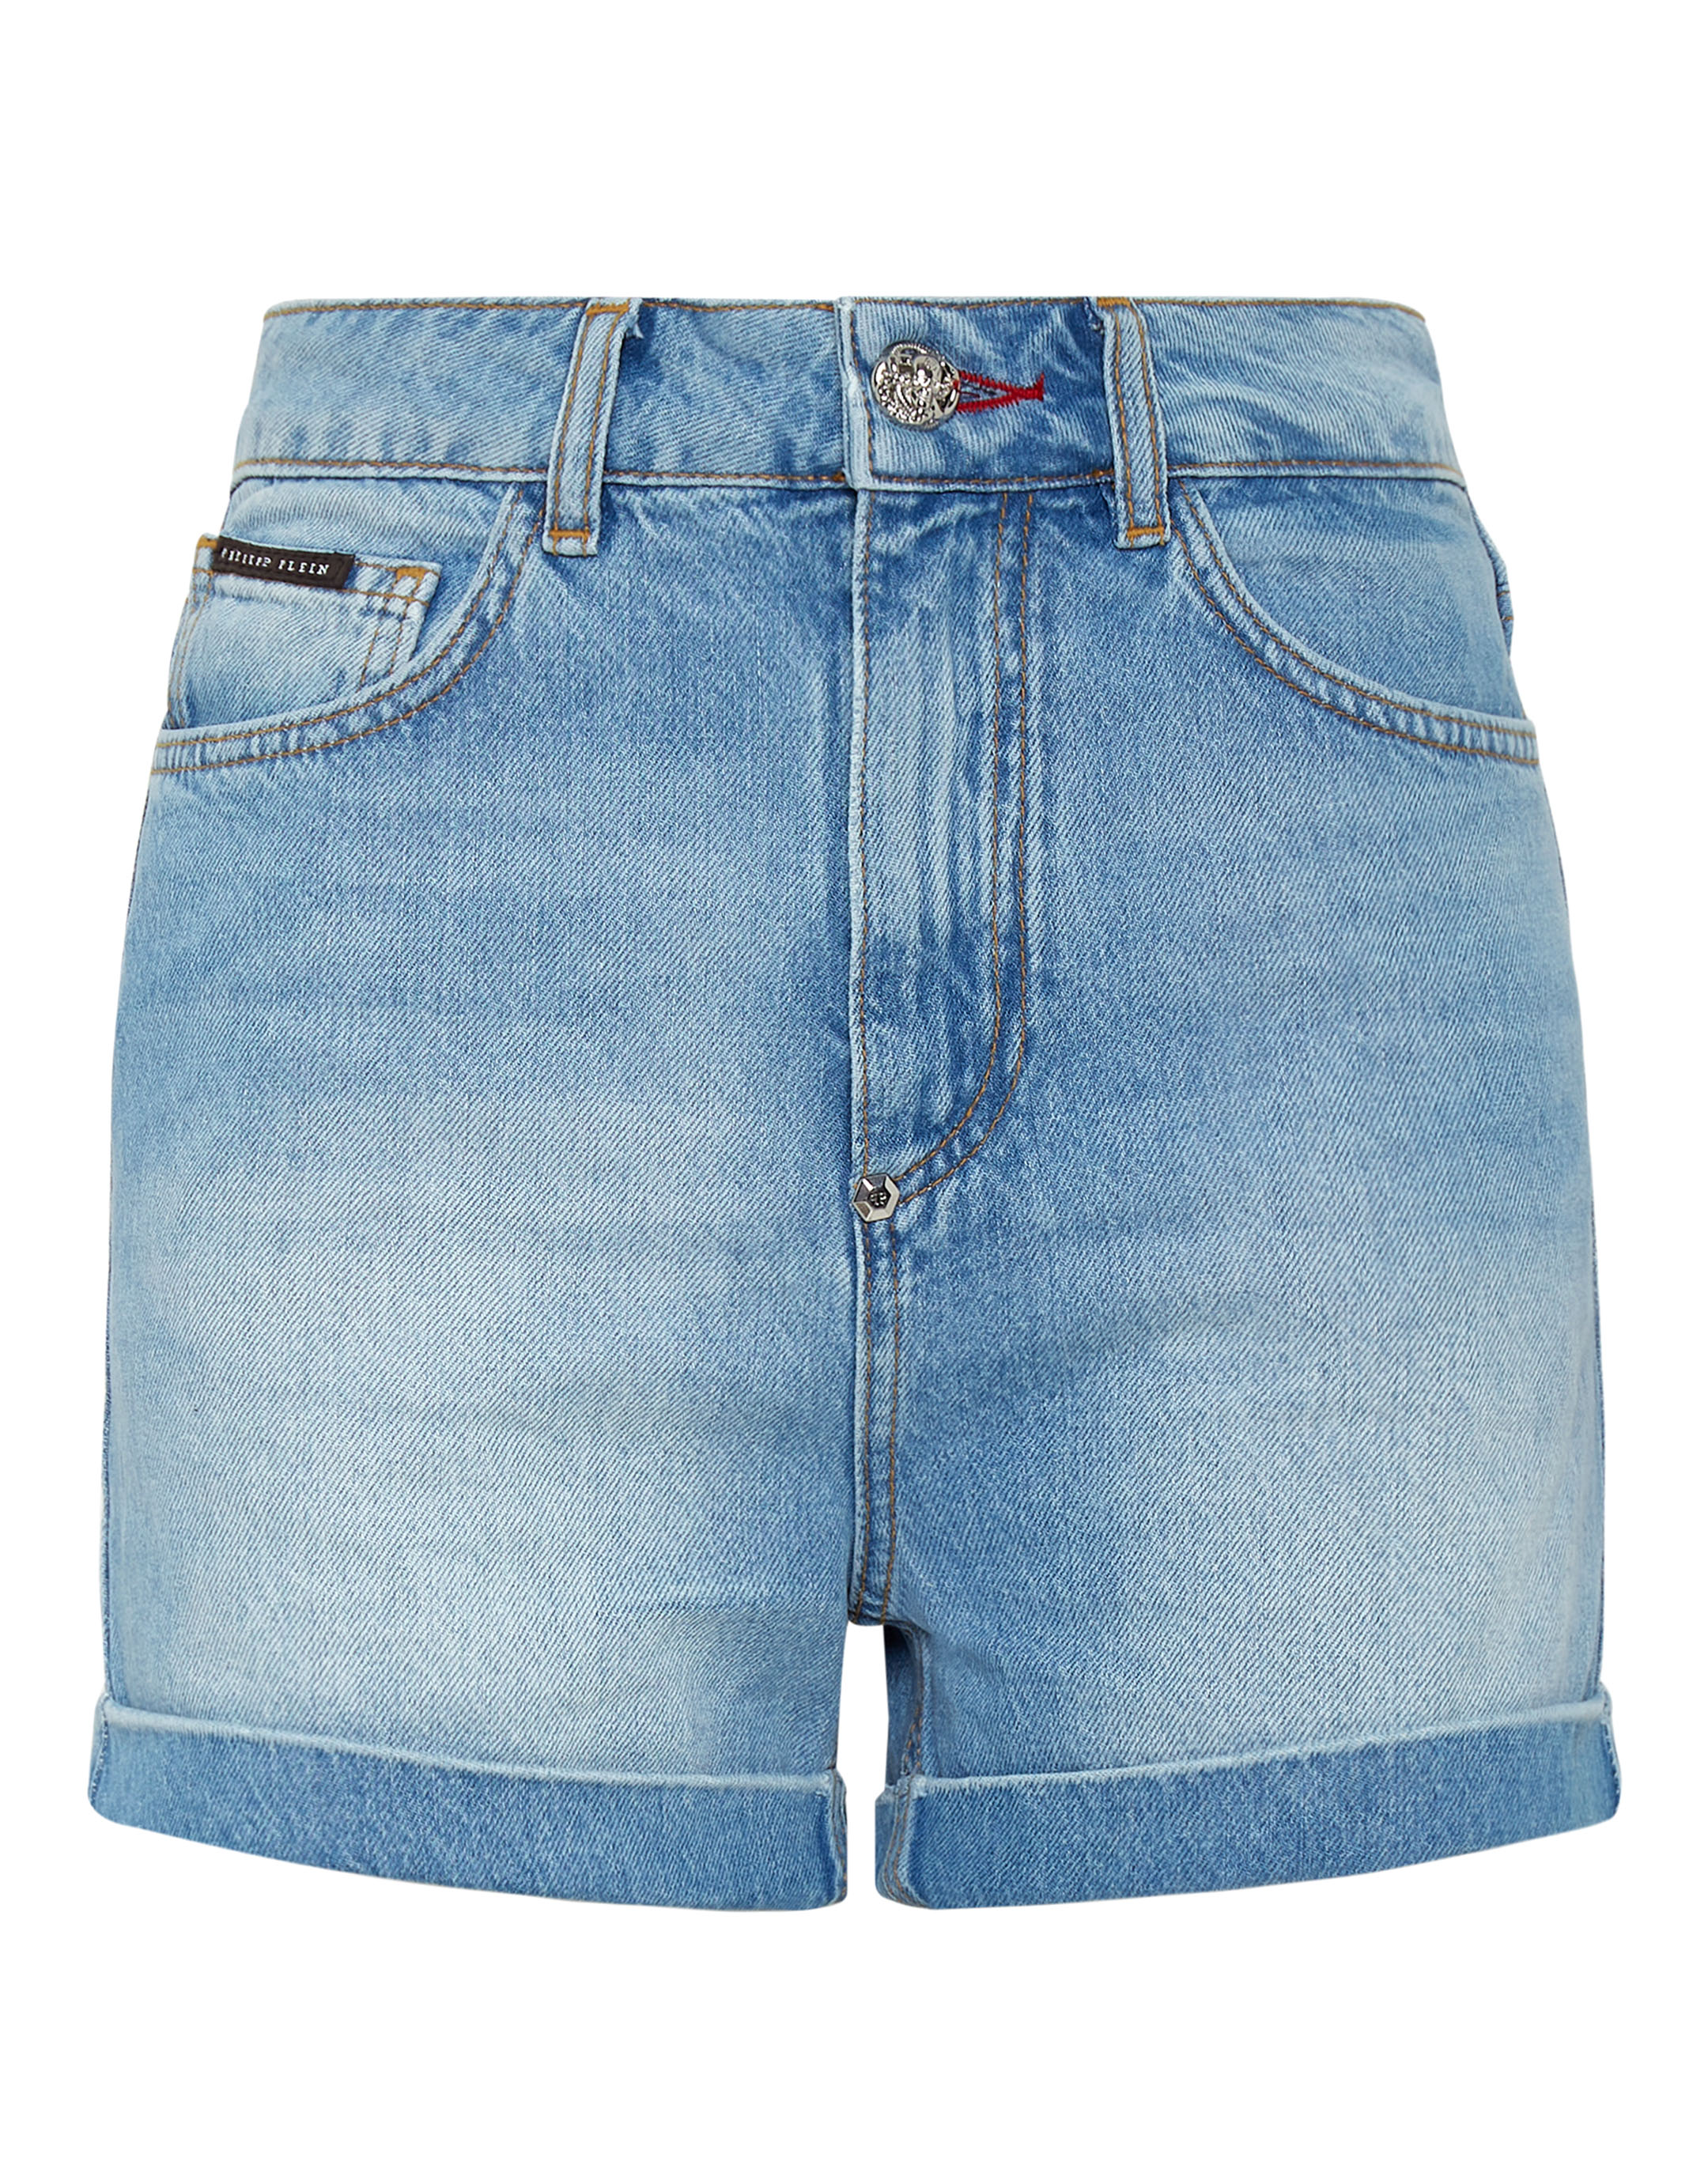 Buy MYADDICTION Low Waist Shorts Mini Hot Pants Jeans Micro Sports Denim  Beach Casual Lady S at Amazon.in